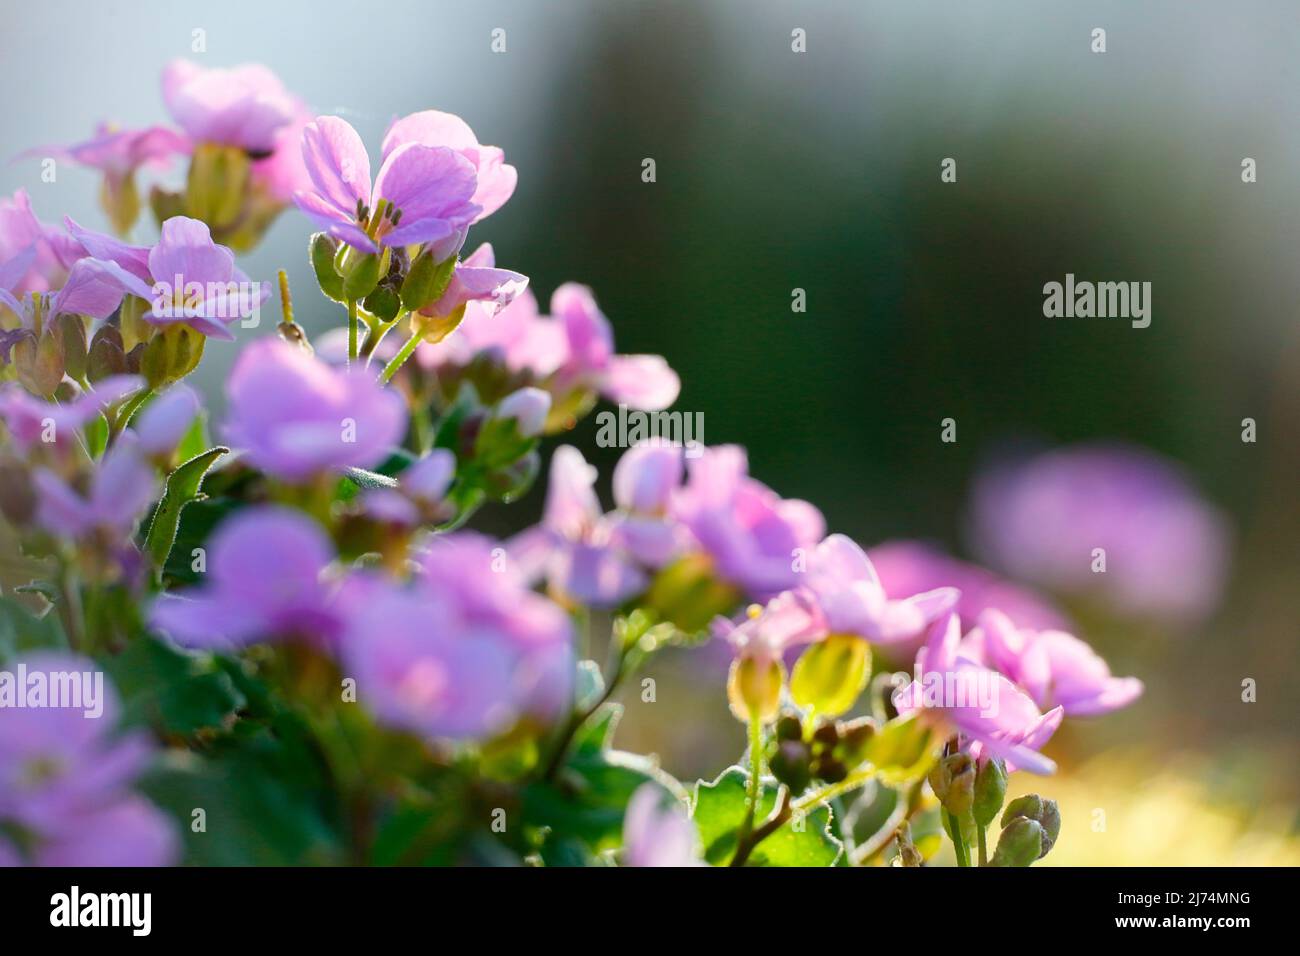 purple rock cress (Aubrieta deltoidea), flowers in Backlight Stock Photo